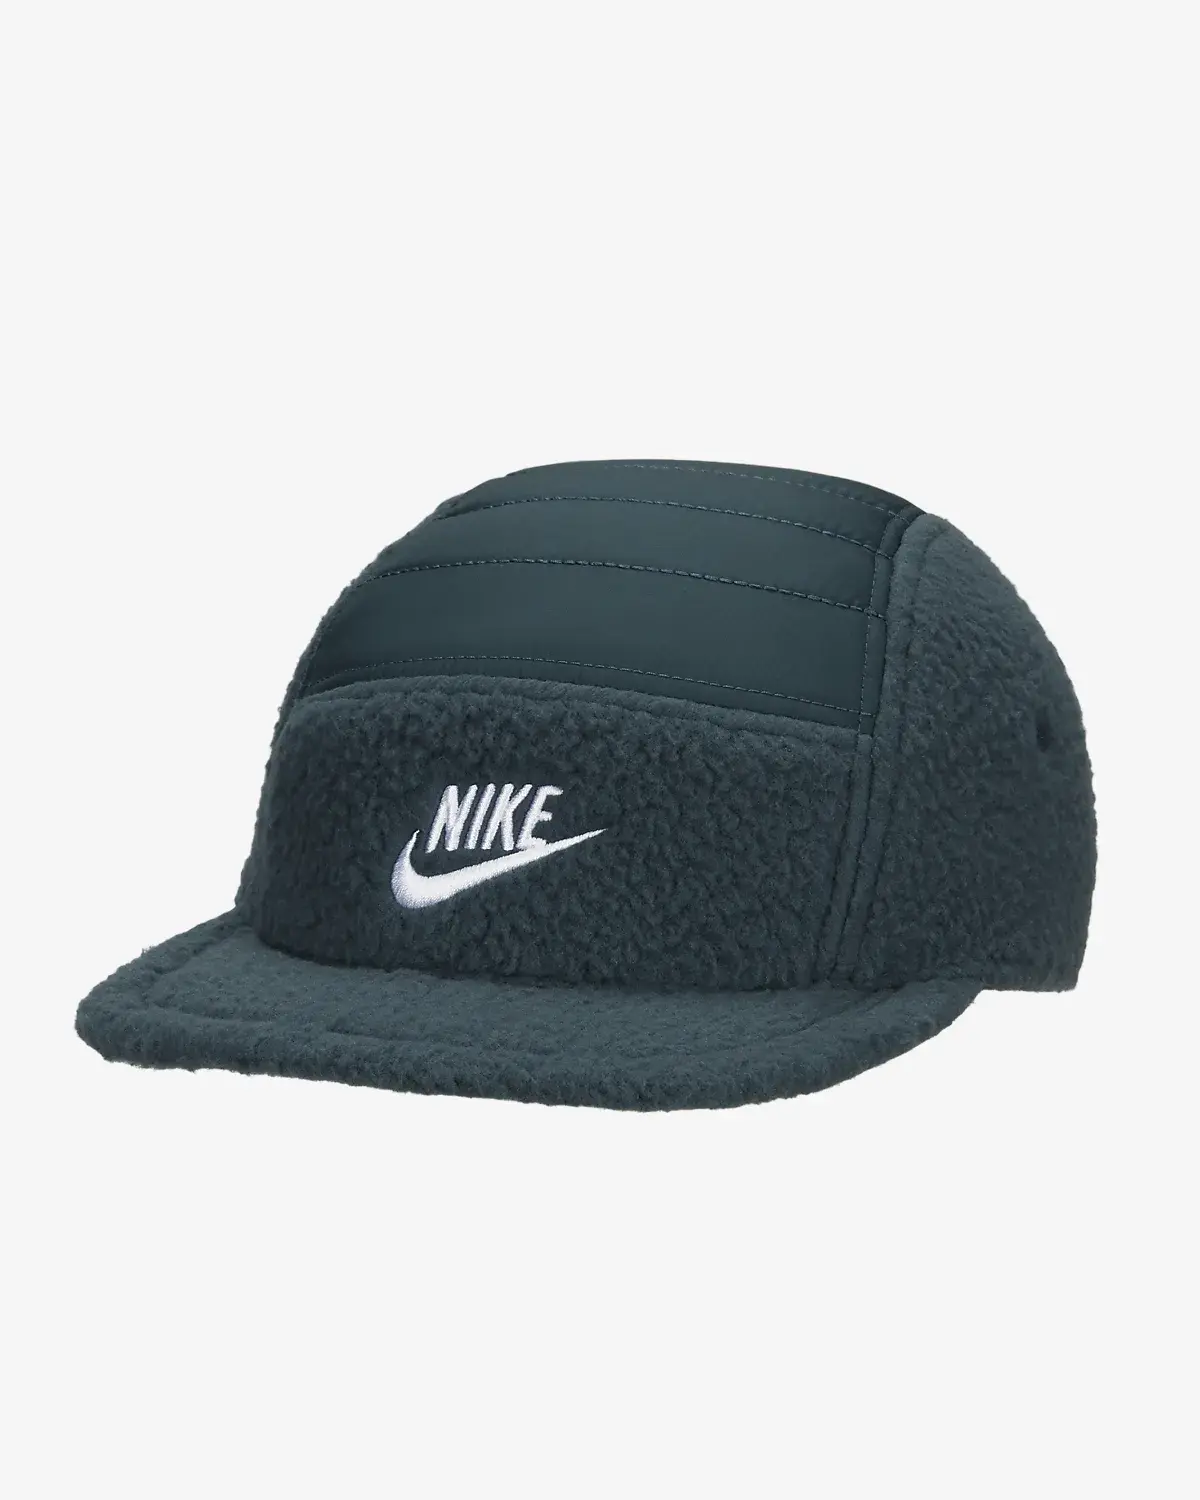 Nike Fly Cap. 1